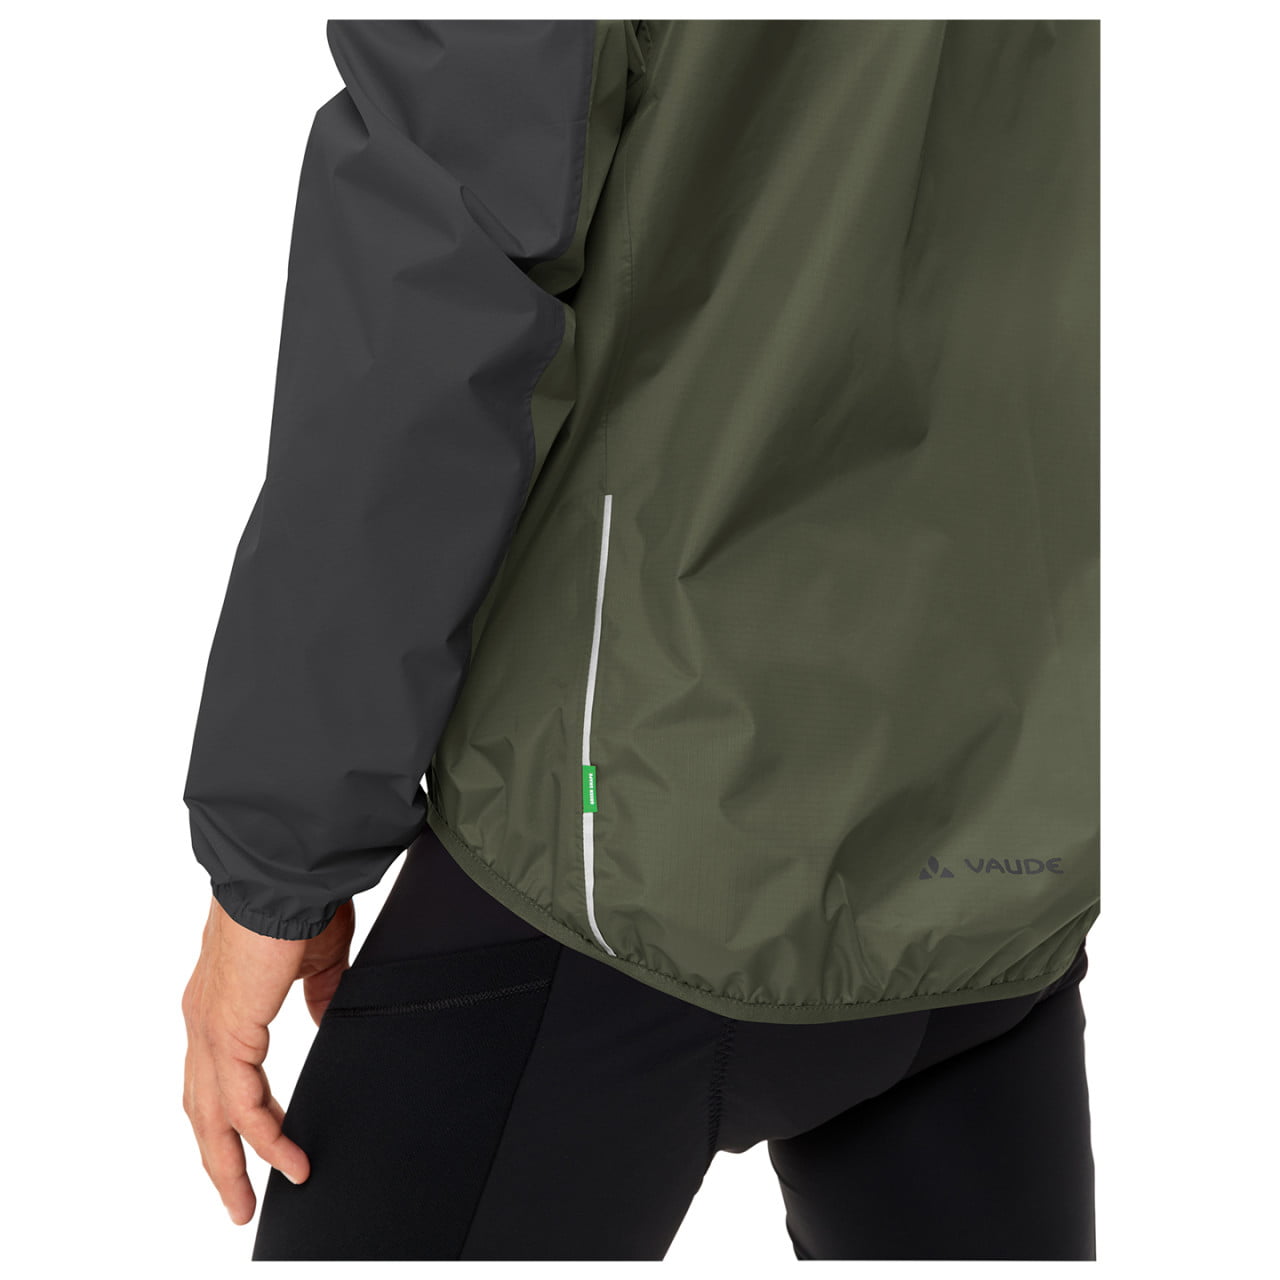 Drop III Waterproof Jacket